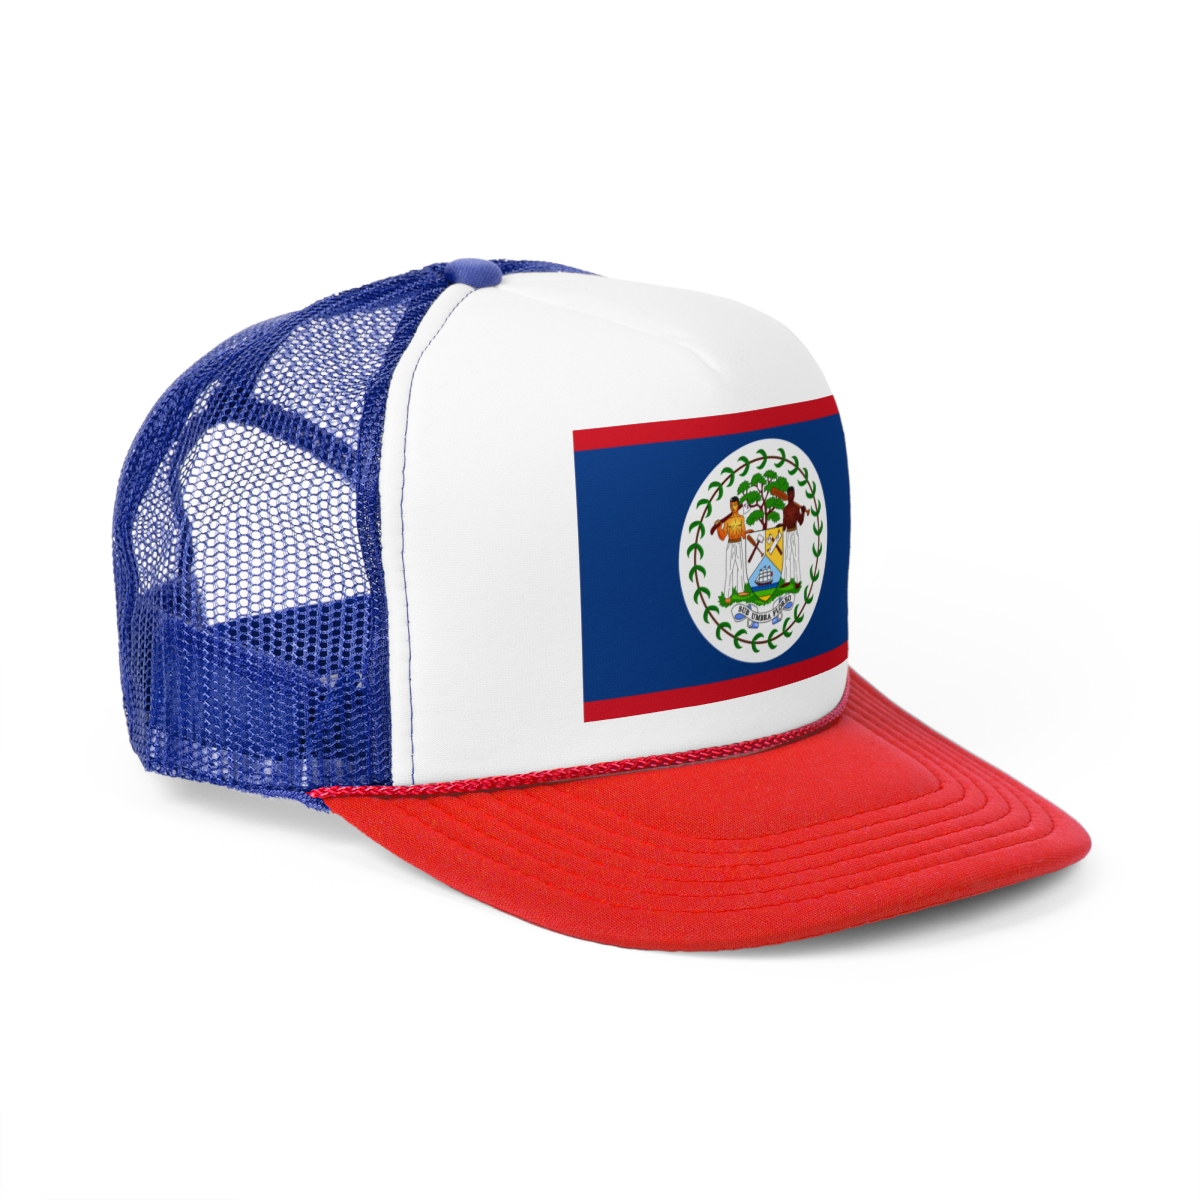 Belize Flag Trucker Cap product thumbnail image